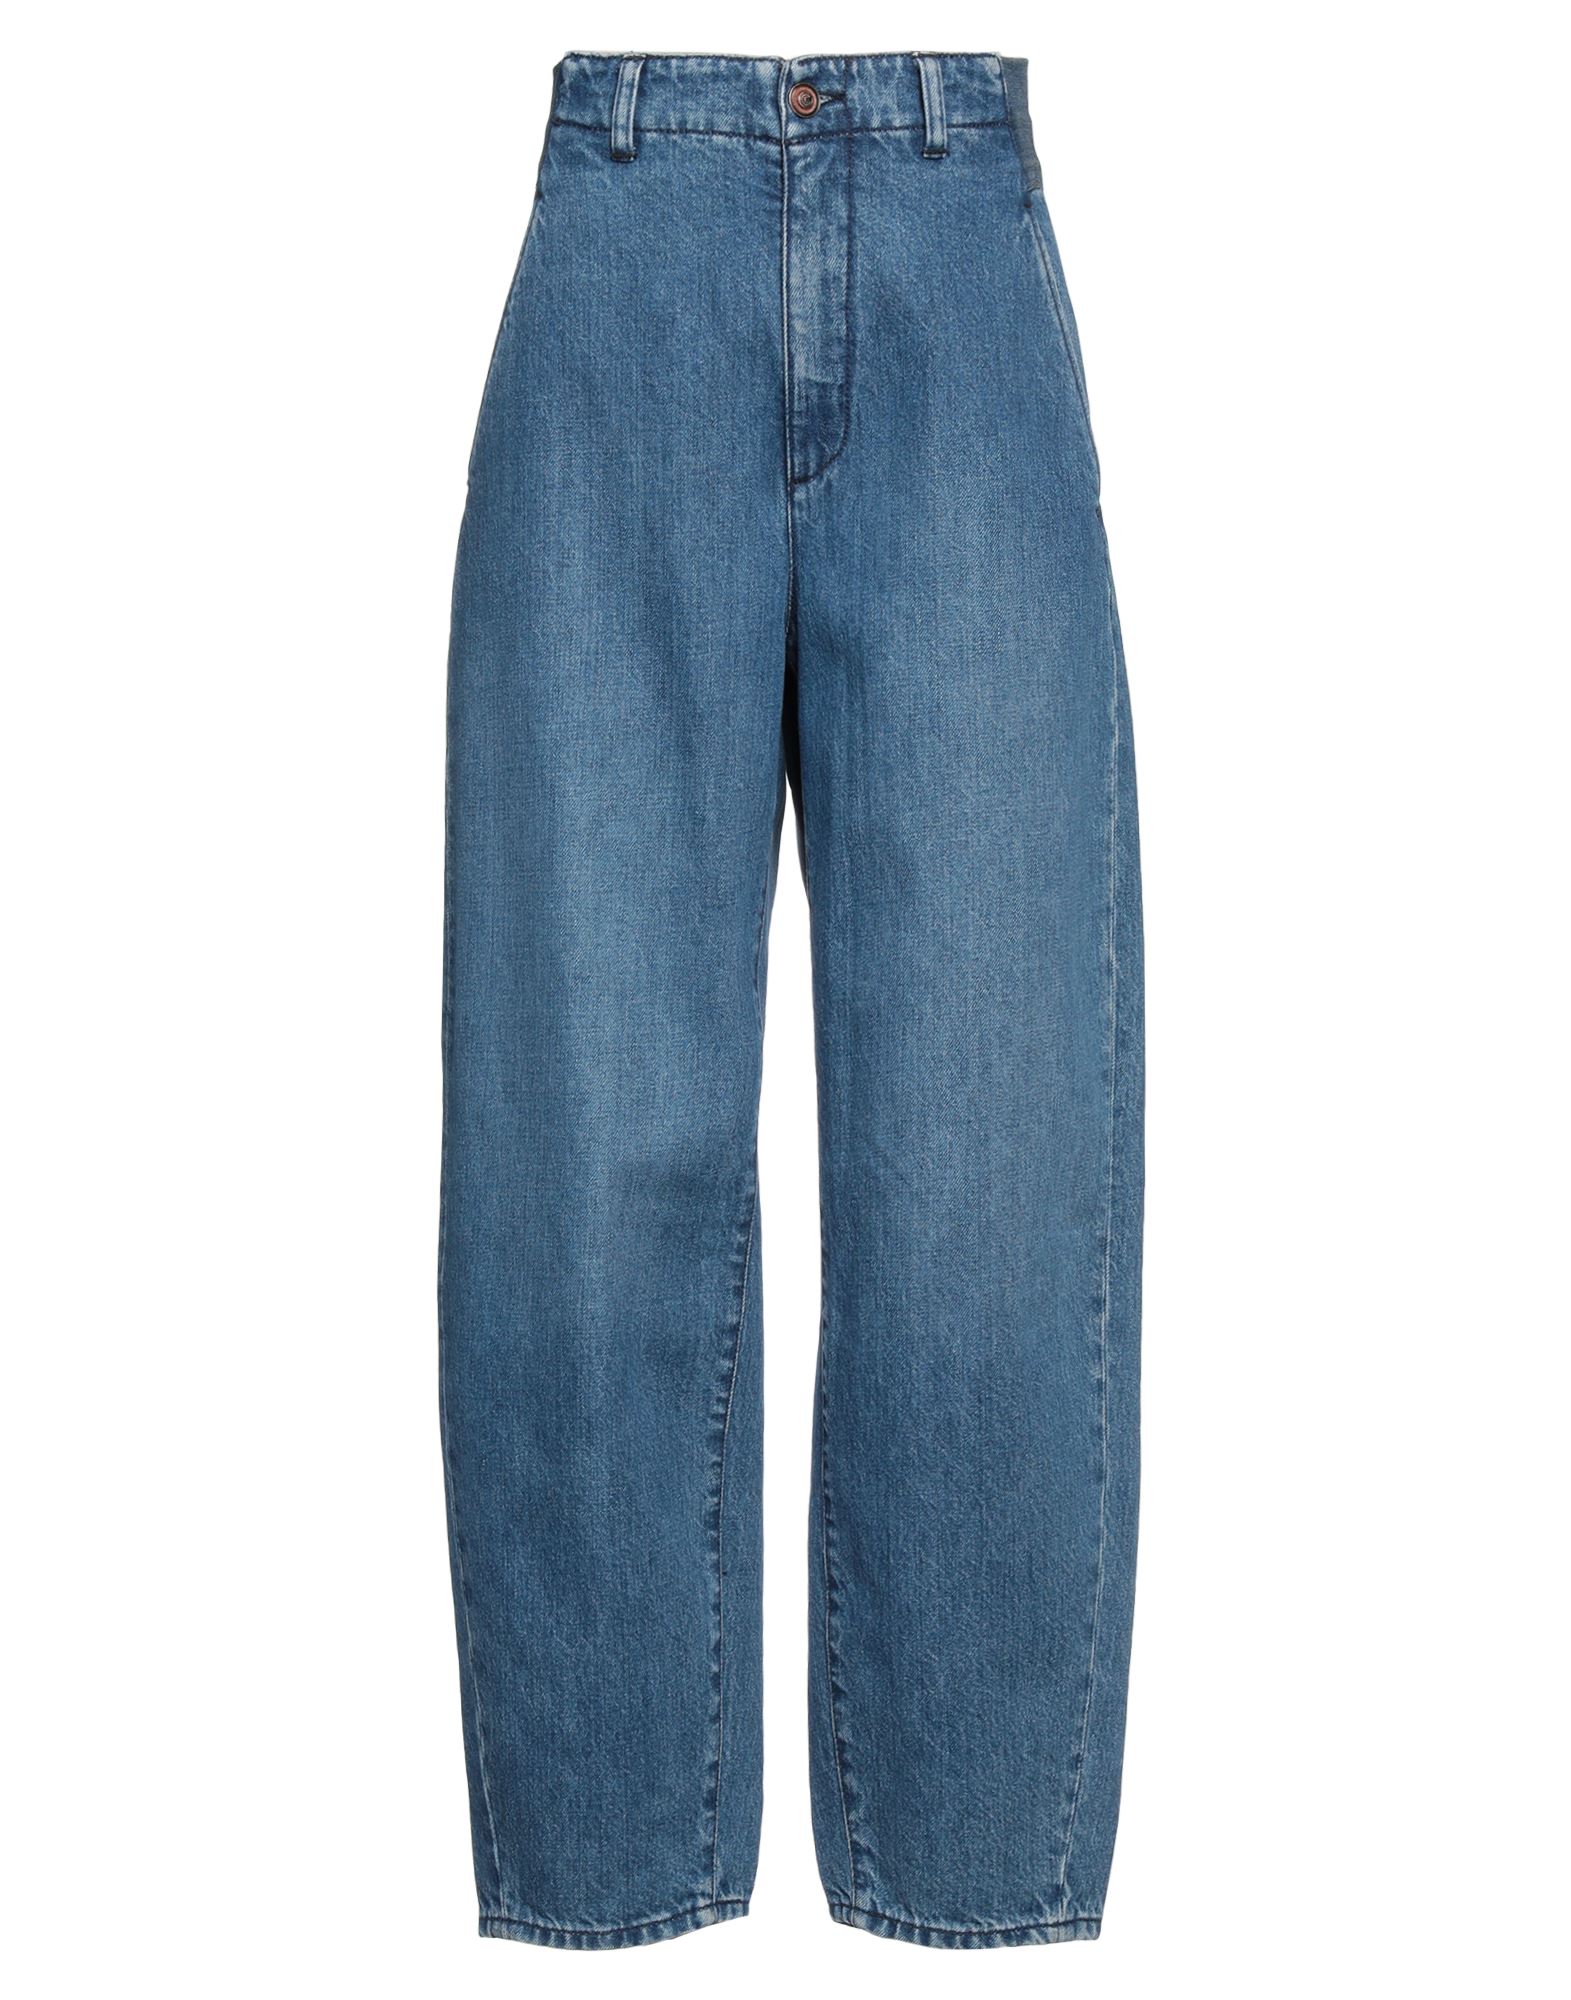 Avantgar Denim By European Culture Jeans In Blue